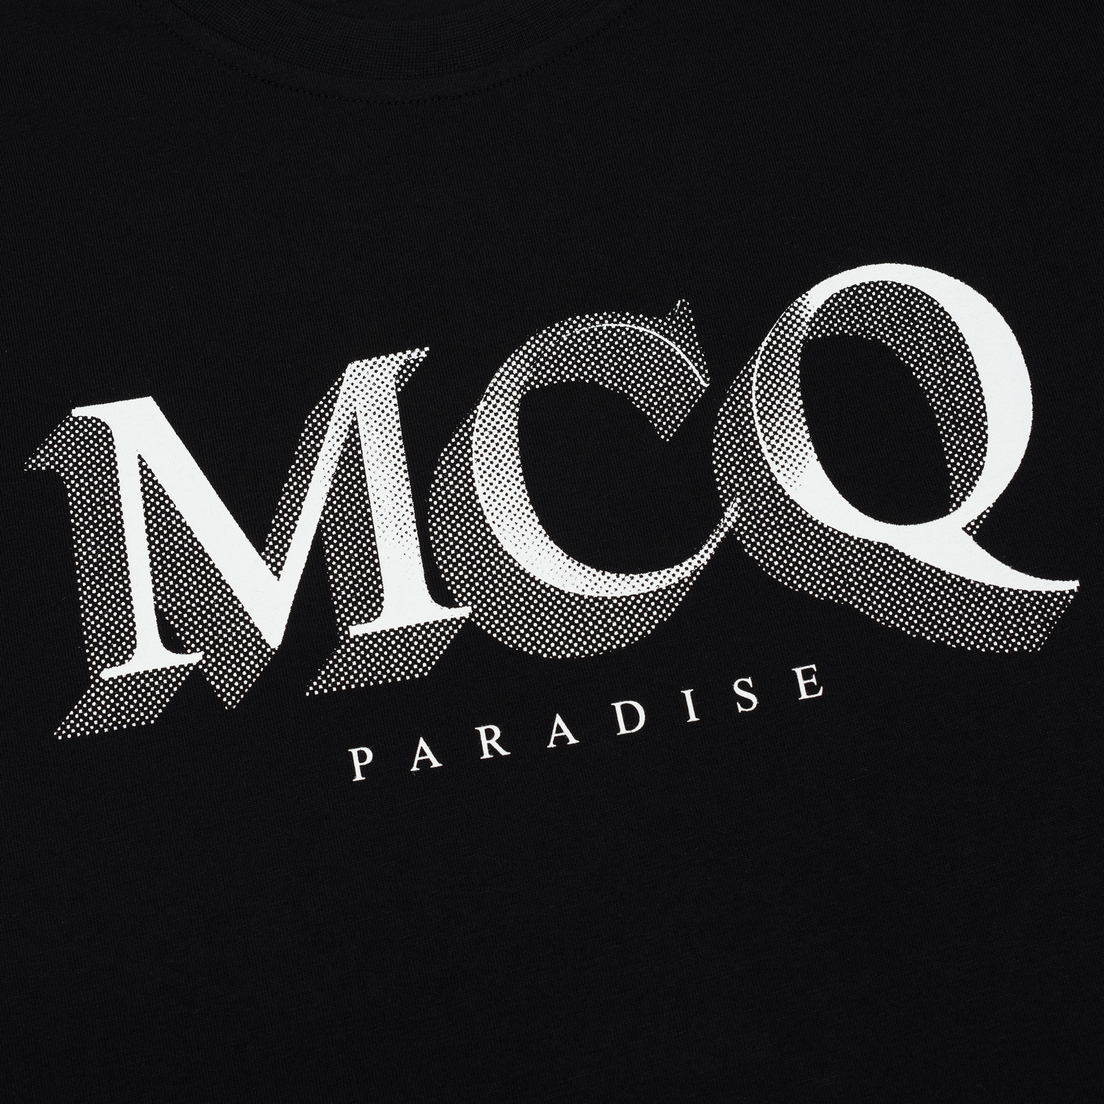 McQ Alexander McQueen Женское платье MCQ Paradise Small